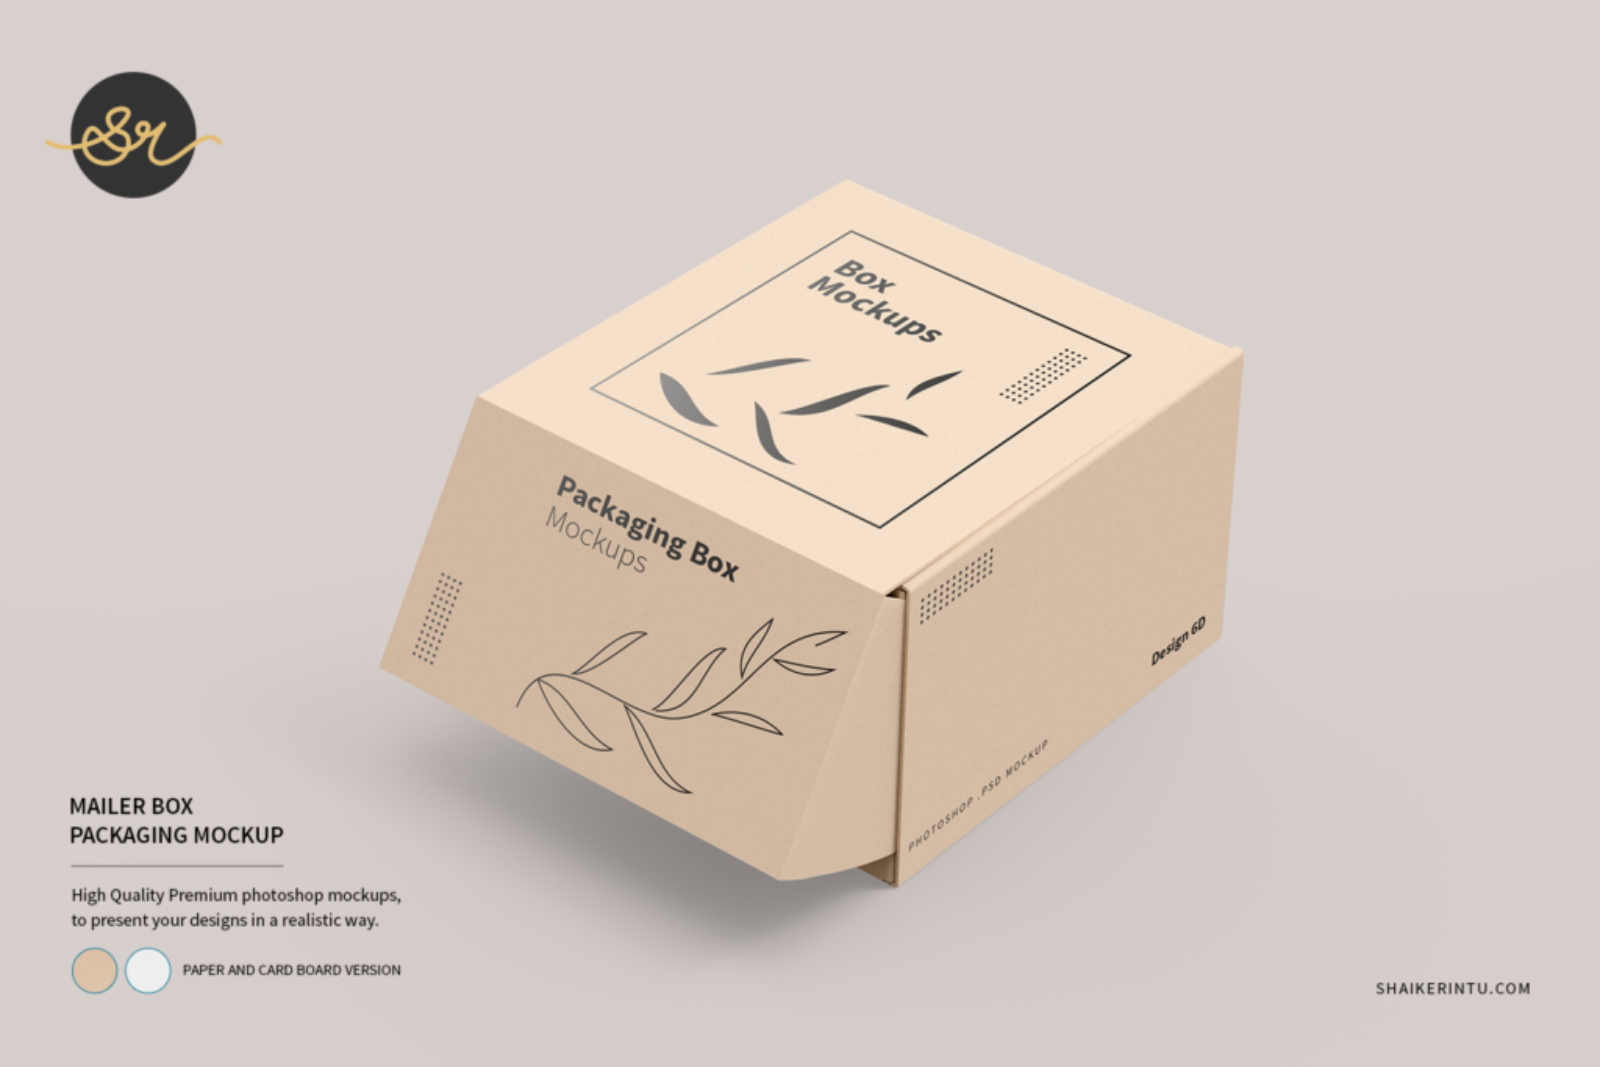 Download Mailing Box Packaging Mockup 6d Shaikerintu Com